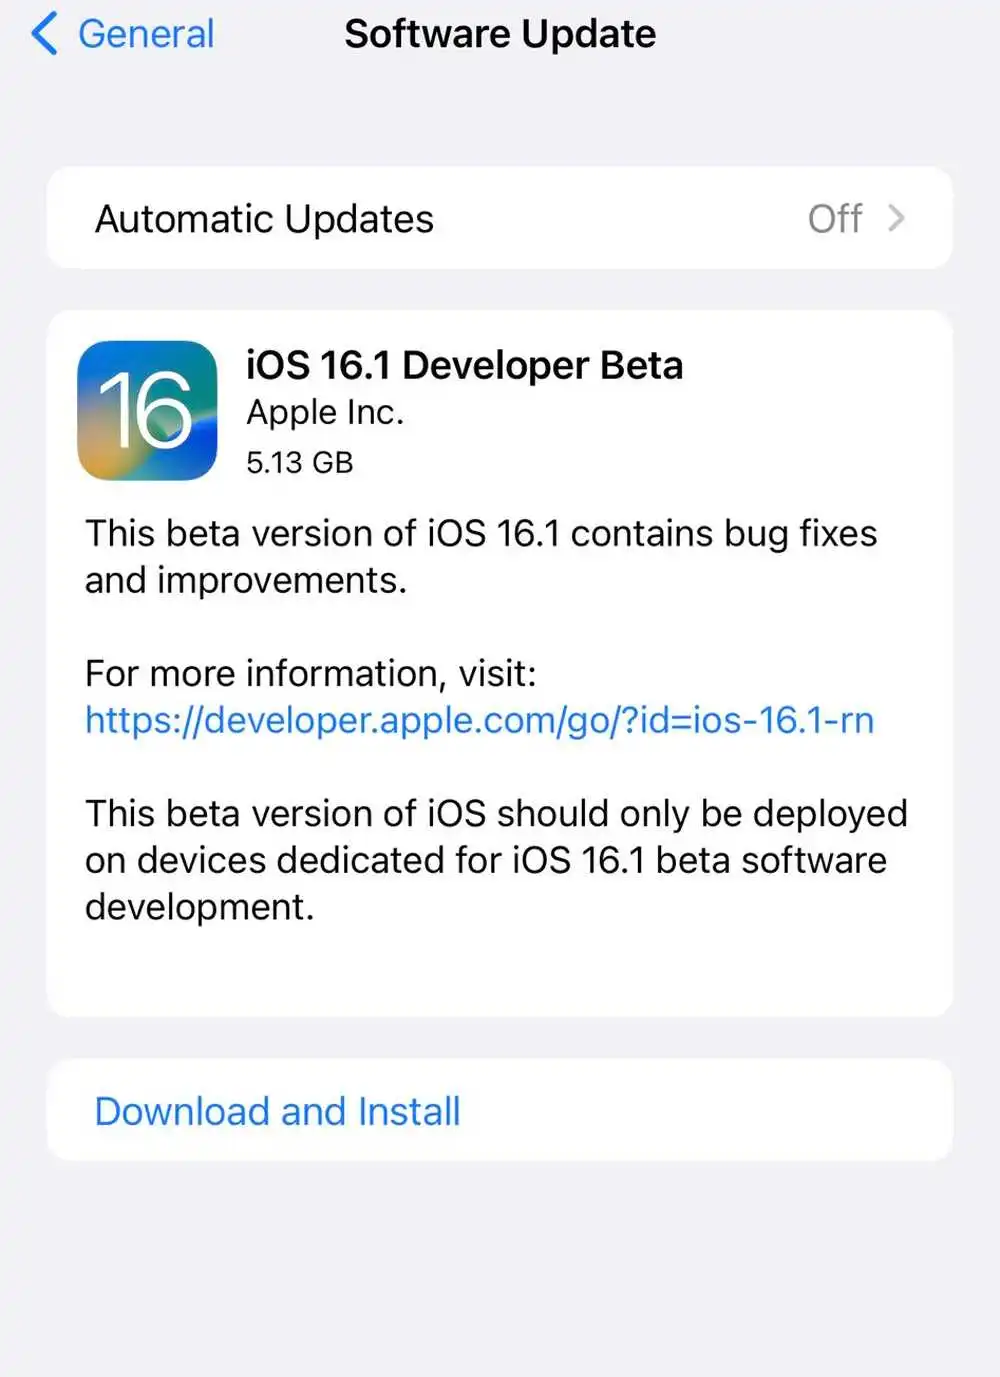 Apple starts releasing iOS 16.1 Beta 1 Update to developers